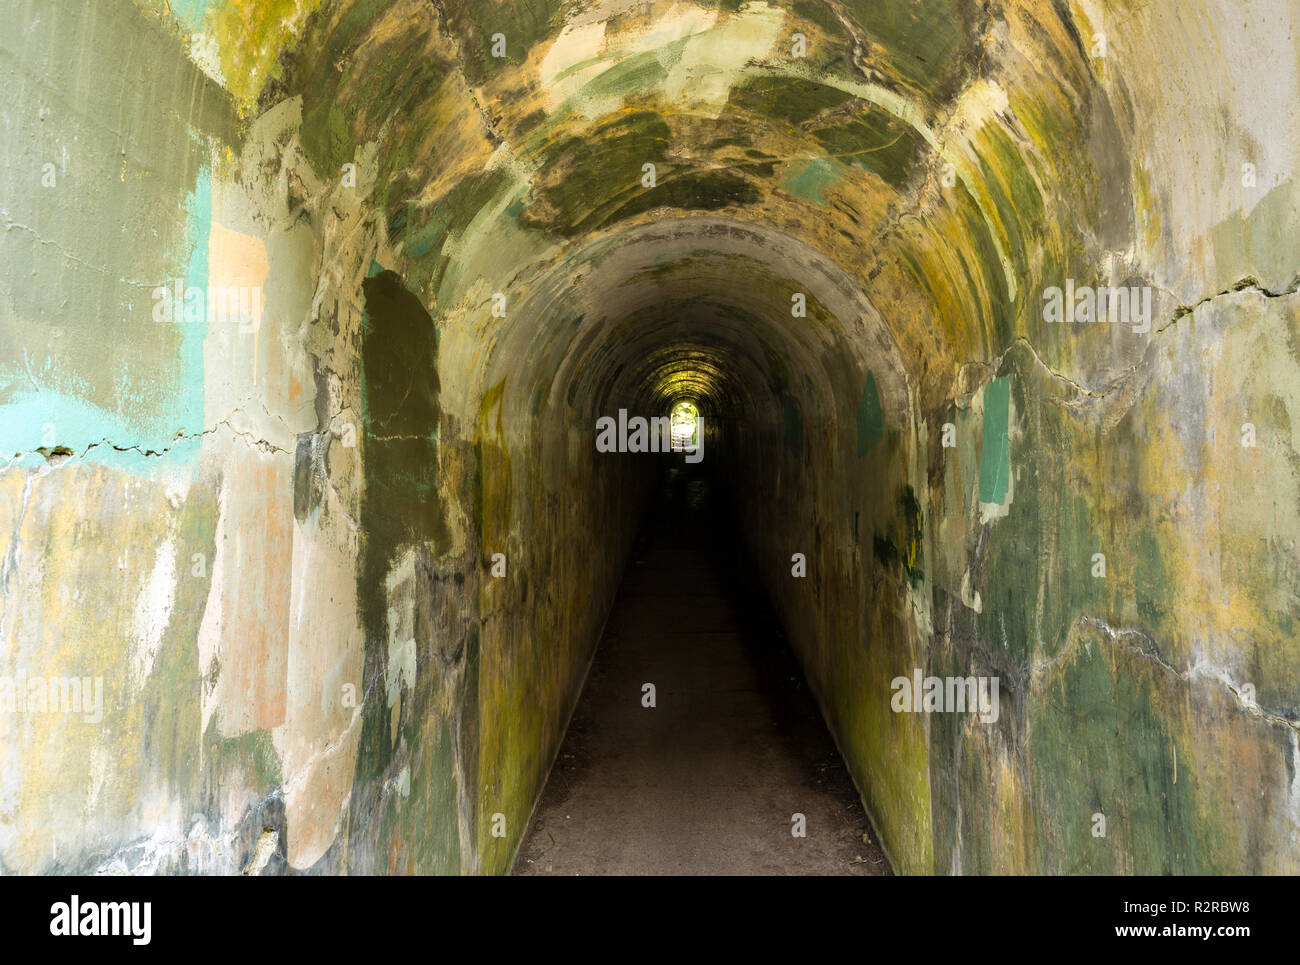 WA 14666-00 ... WASHINGTON - lackiert Tunnel am Fort Warden State Park in Port Townsend. Stockfoto